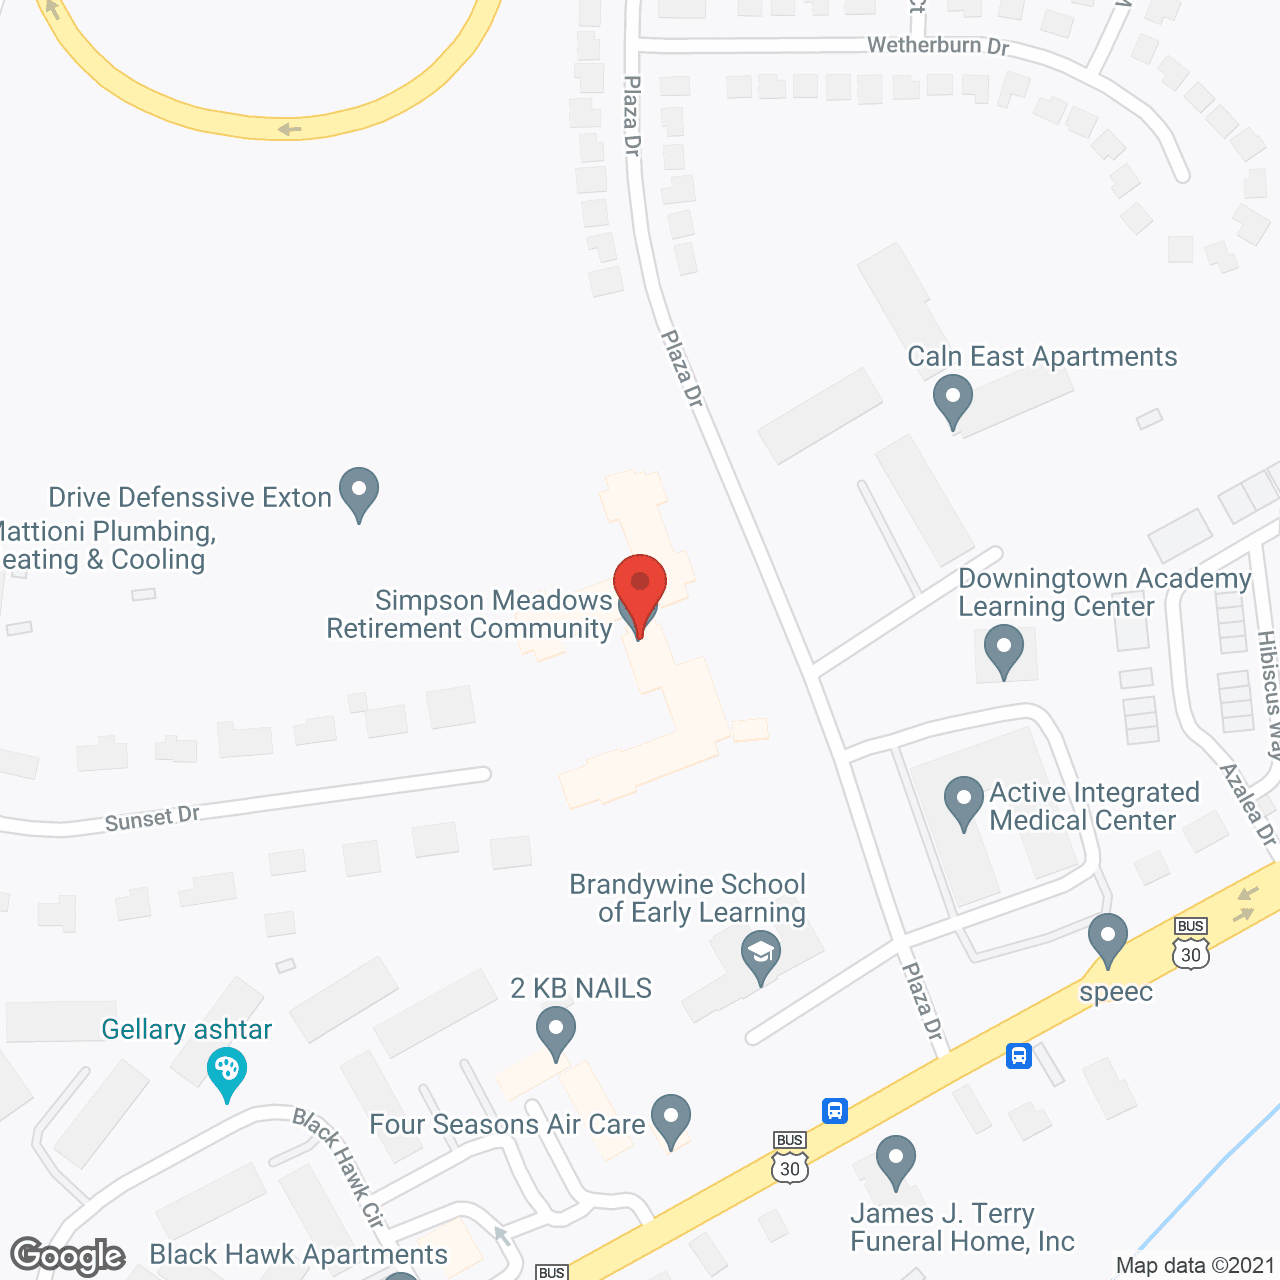 Simpson Meadows in google map